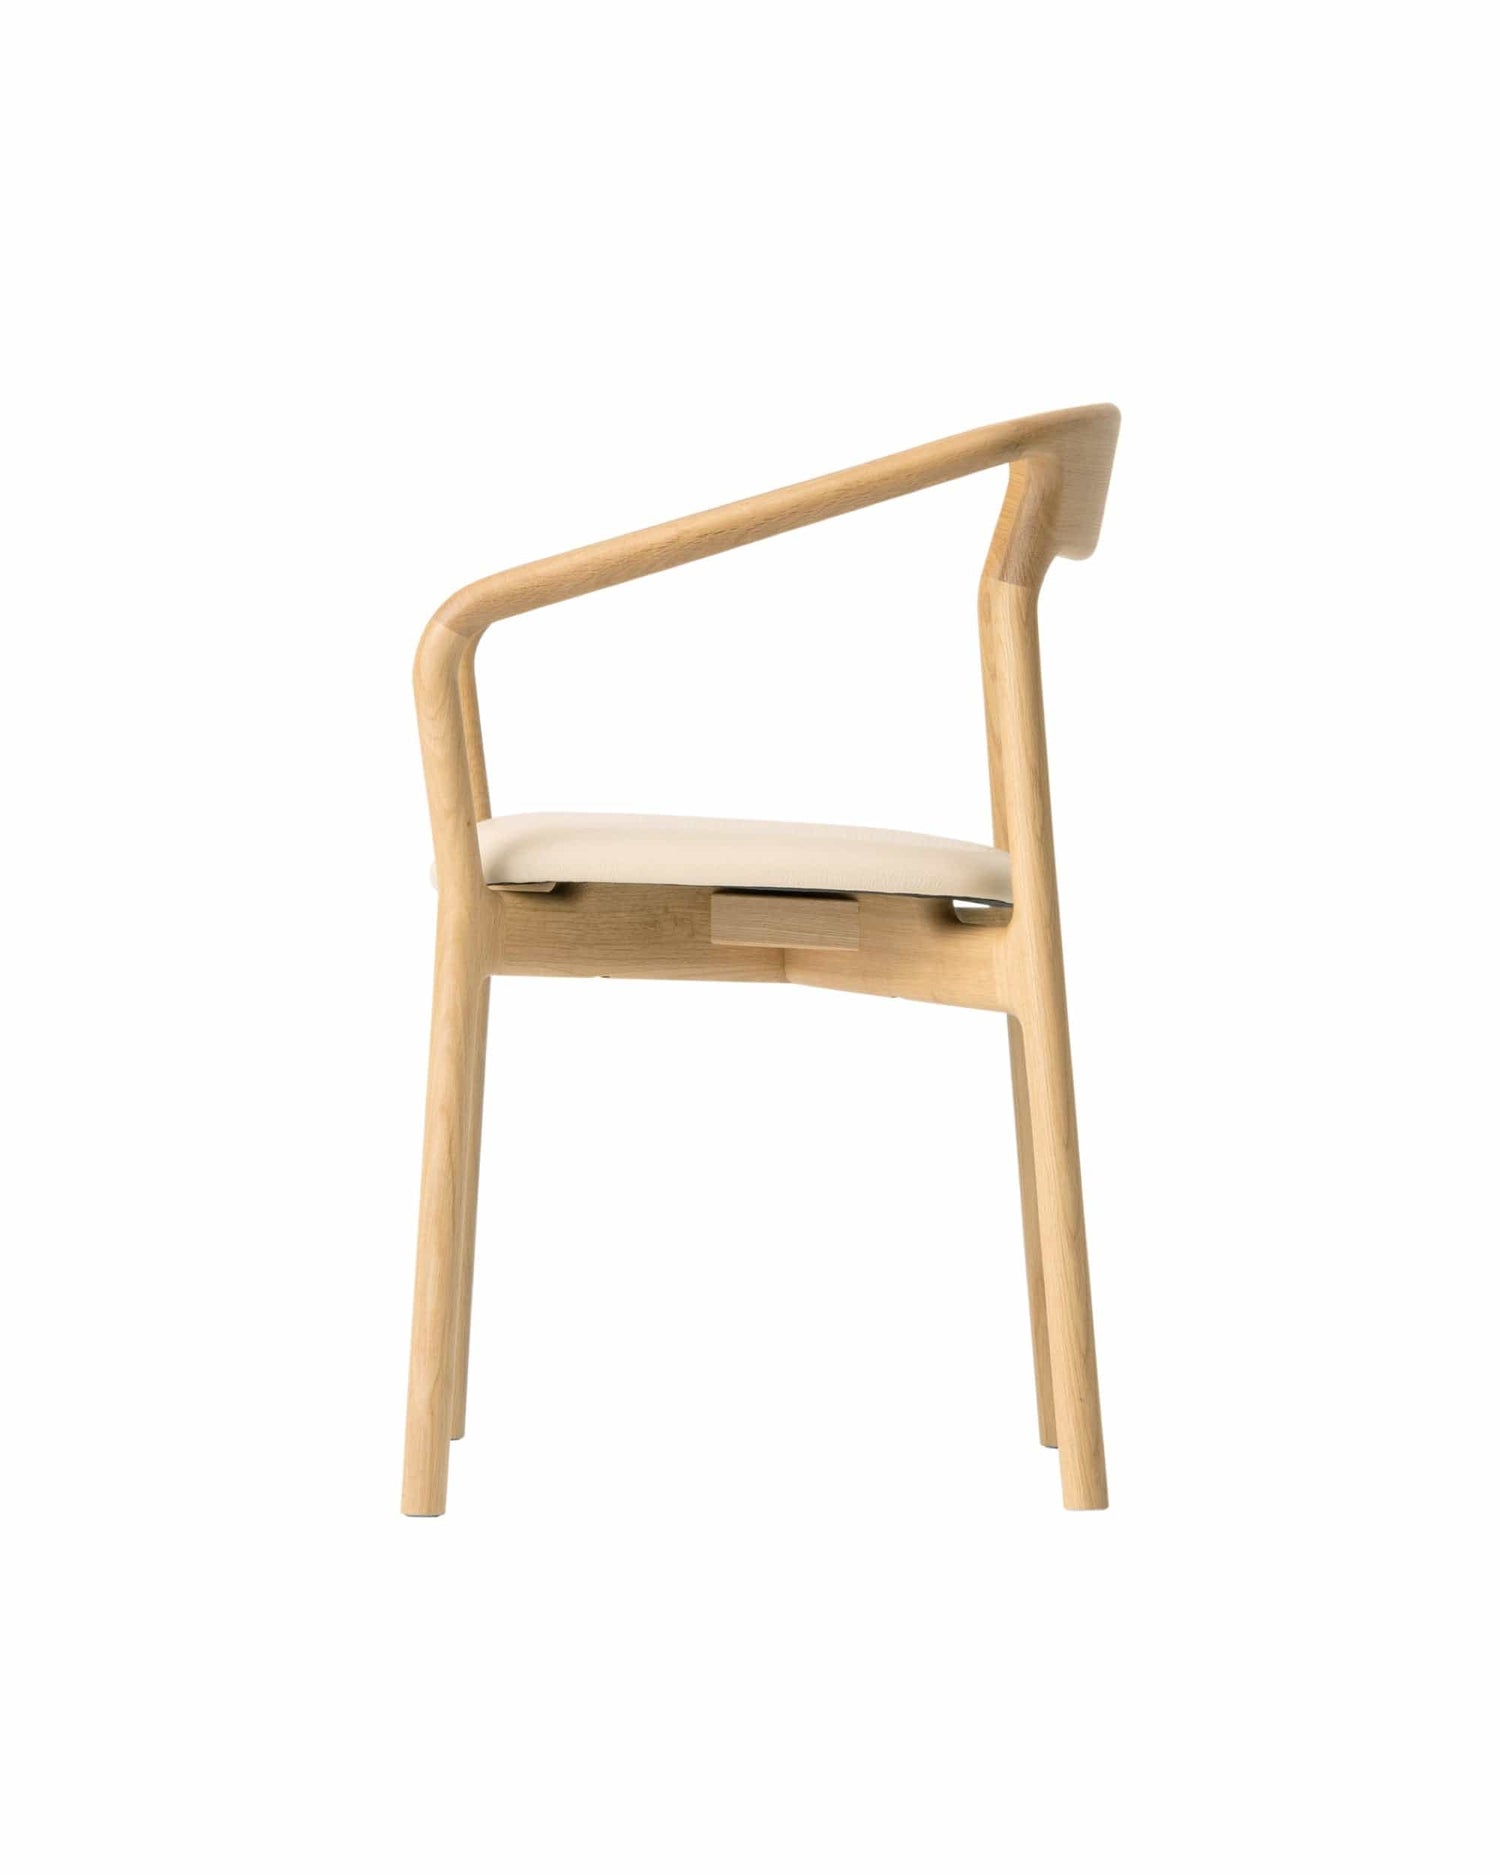 KORENTO Armchair (Upholstered Seat), Japanese Oak Natural